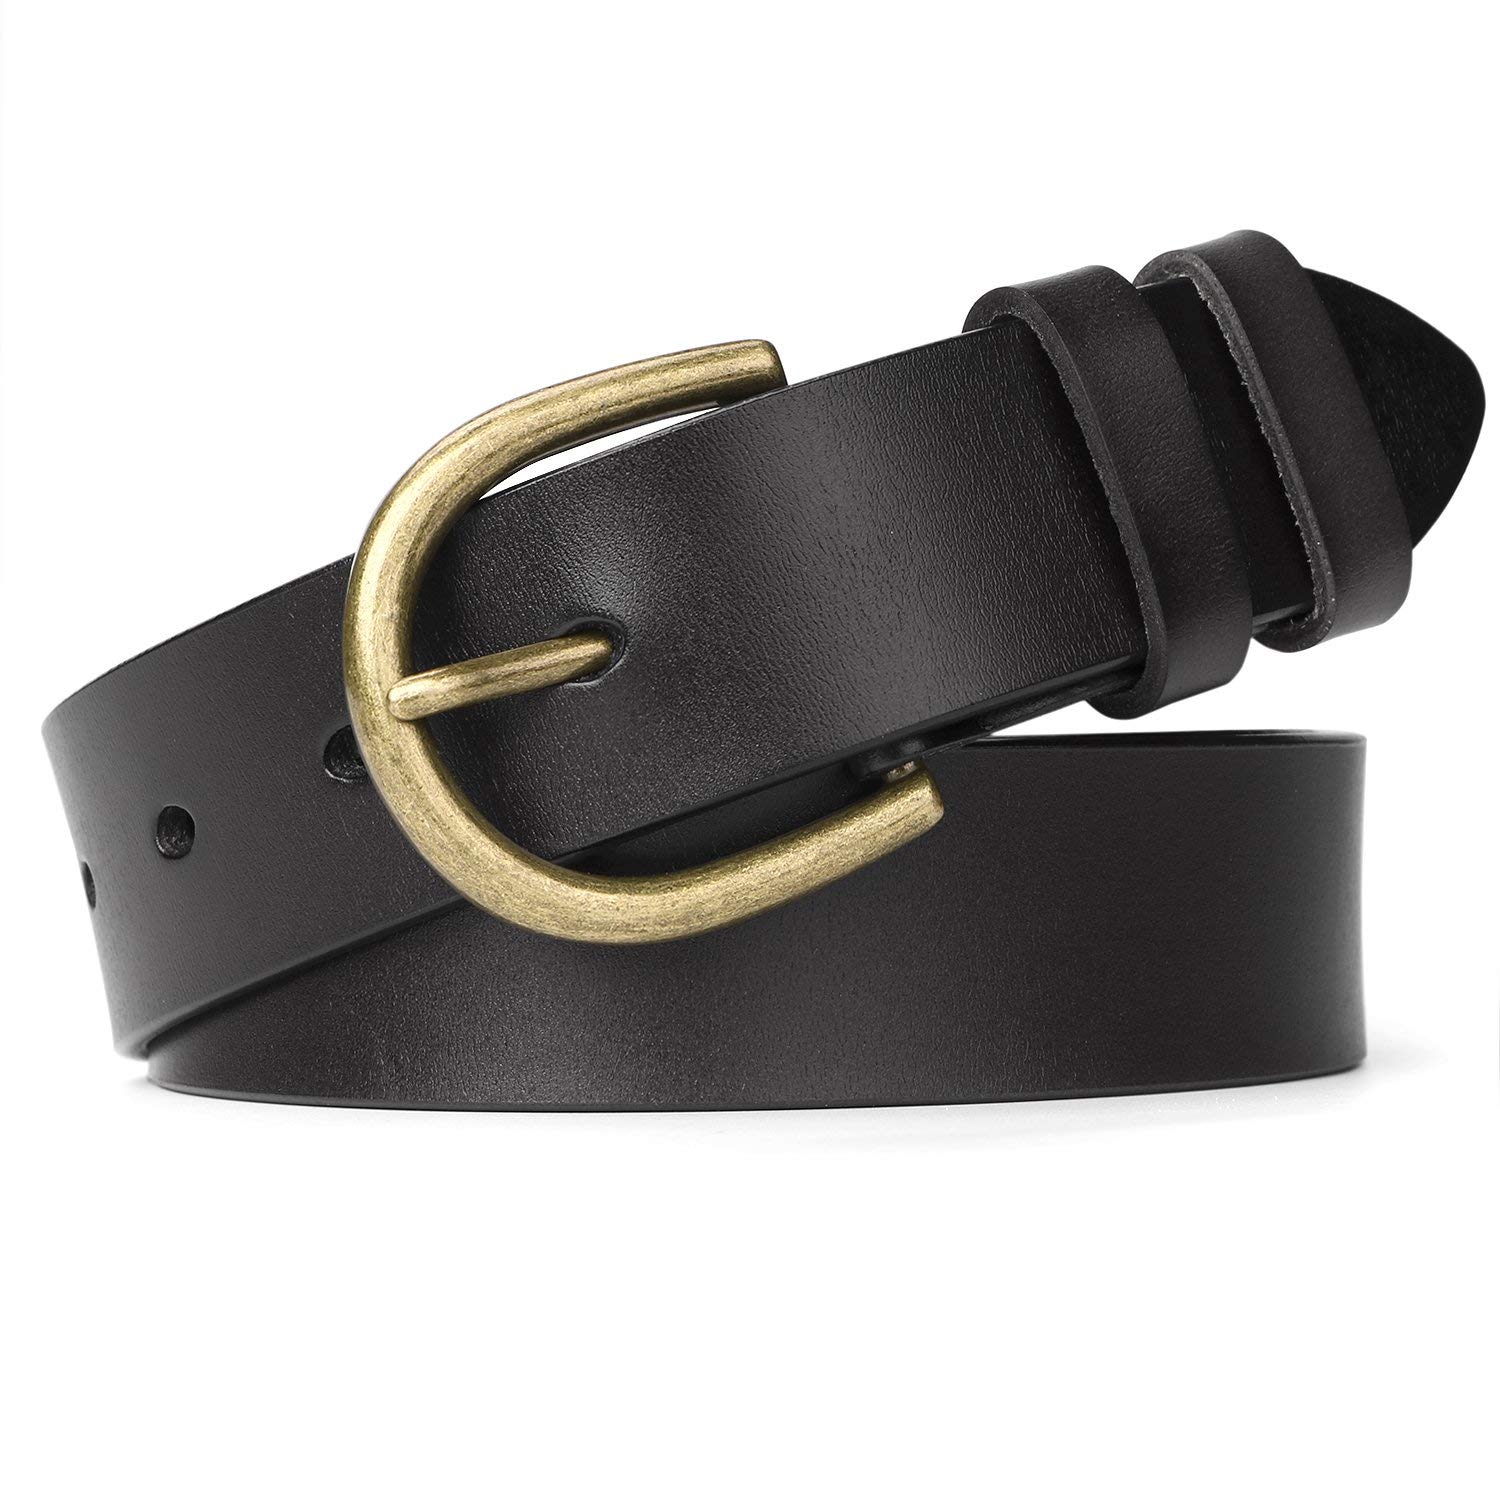 JASGOOD Women Leather Belt Black Waist Belts for Jeans Pants Dresses